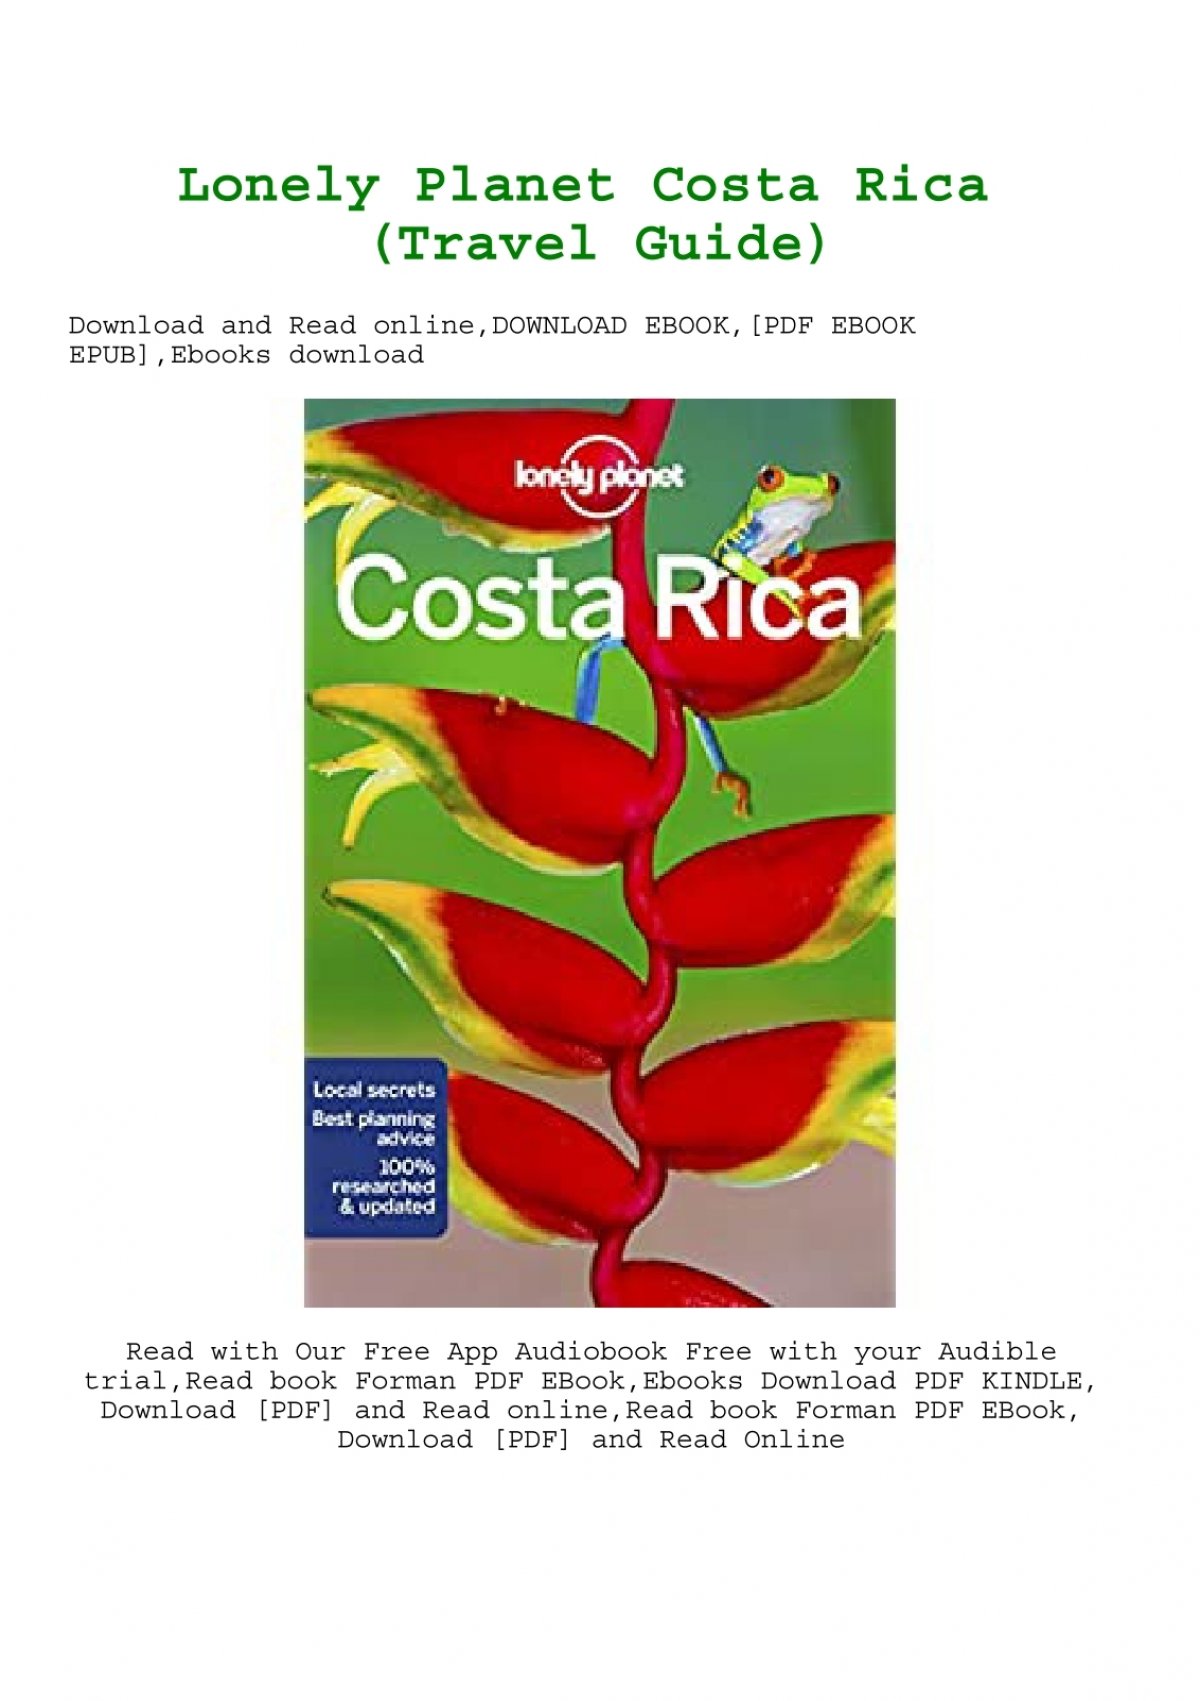 Downloadpdf Lonely Planet Costa Rica Travel Guide Pdf Download